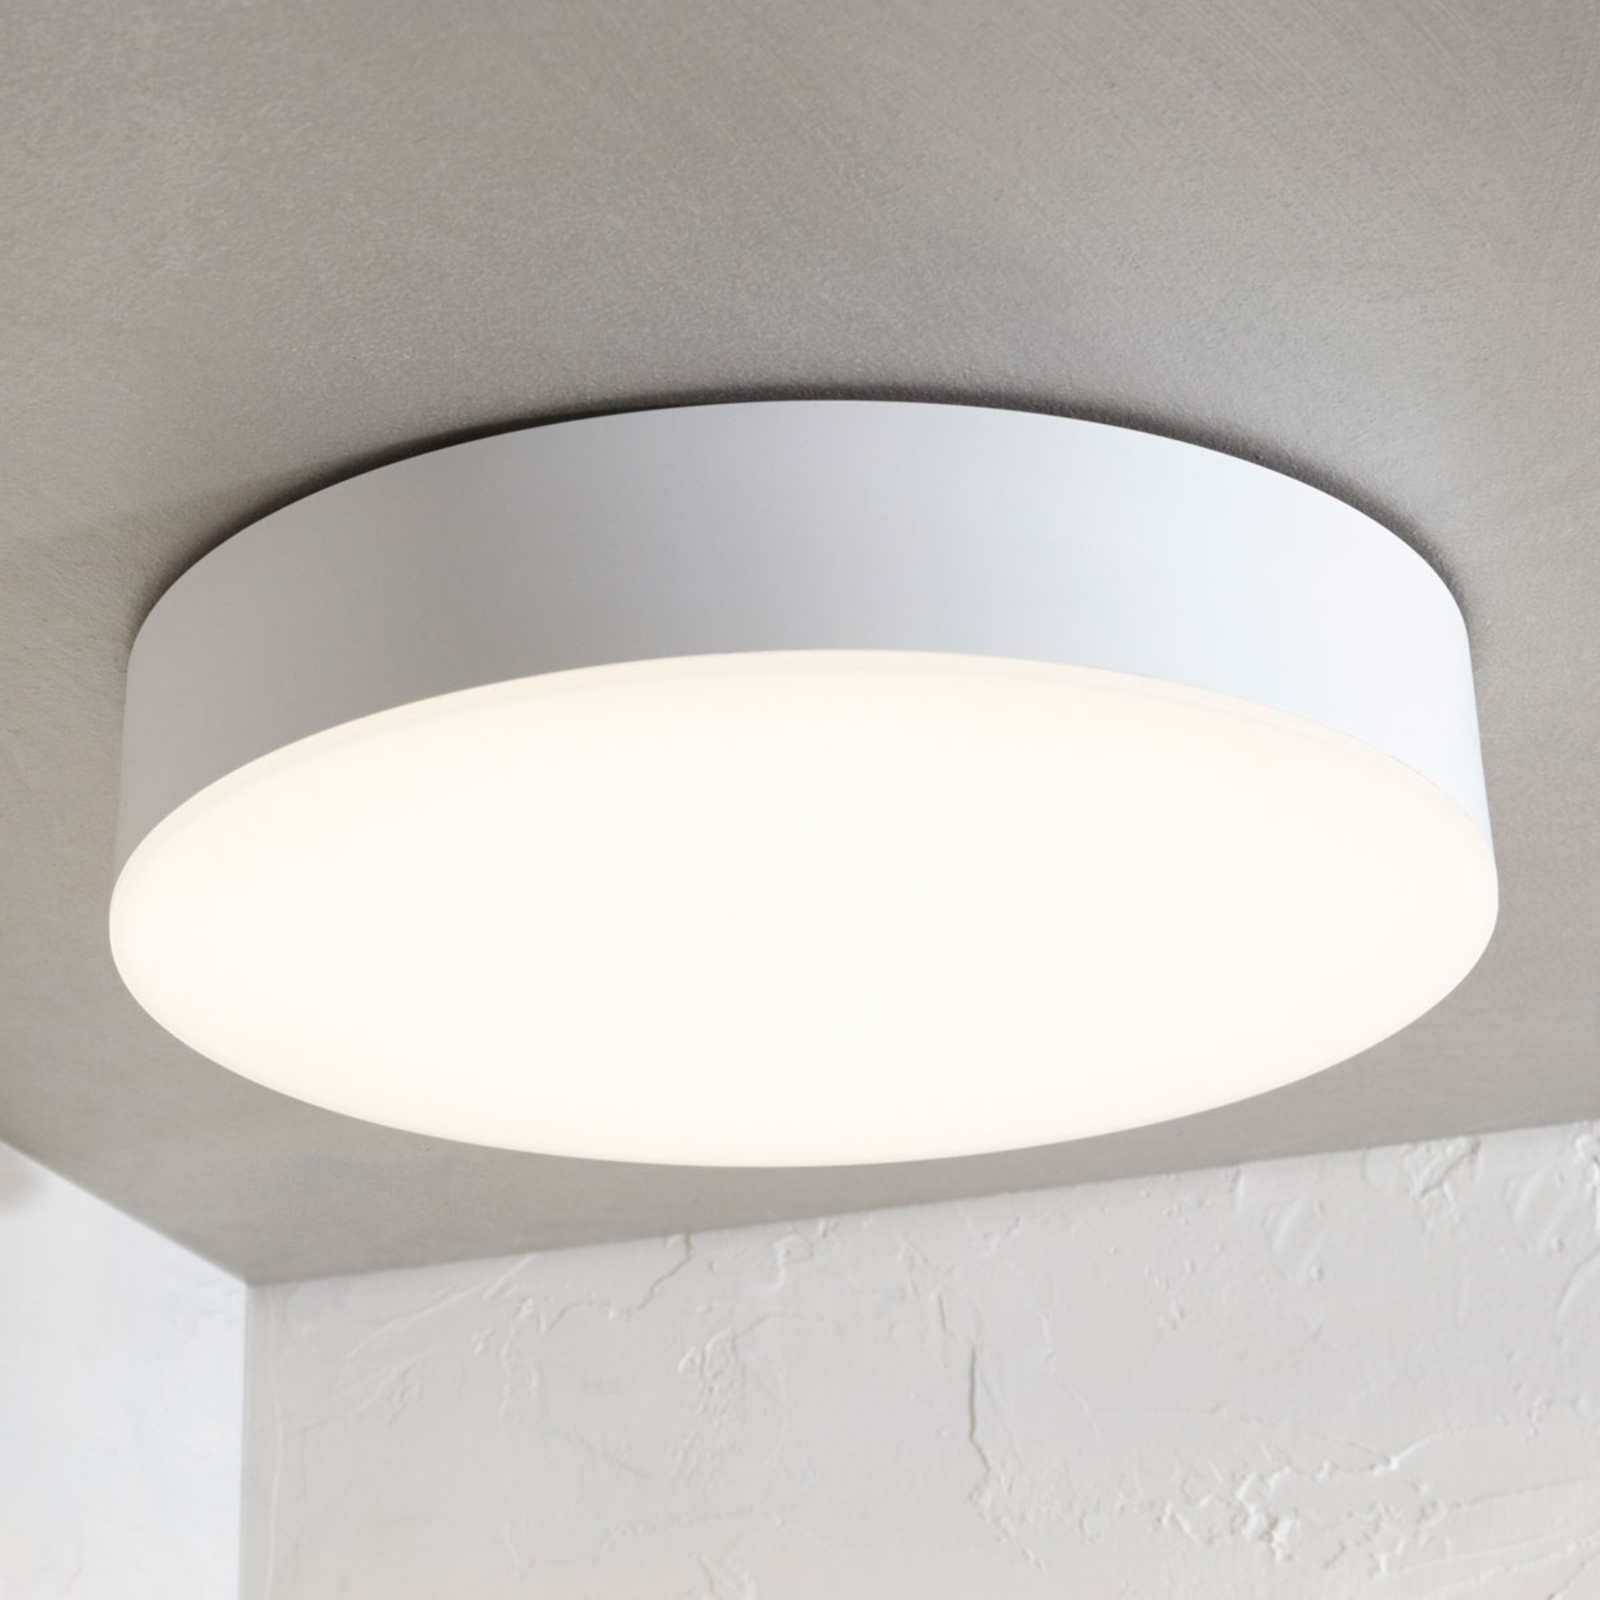 Lampa sufitowa LED Lyam, IP65, biała